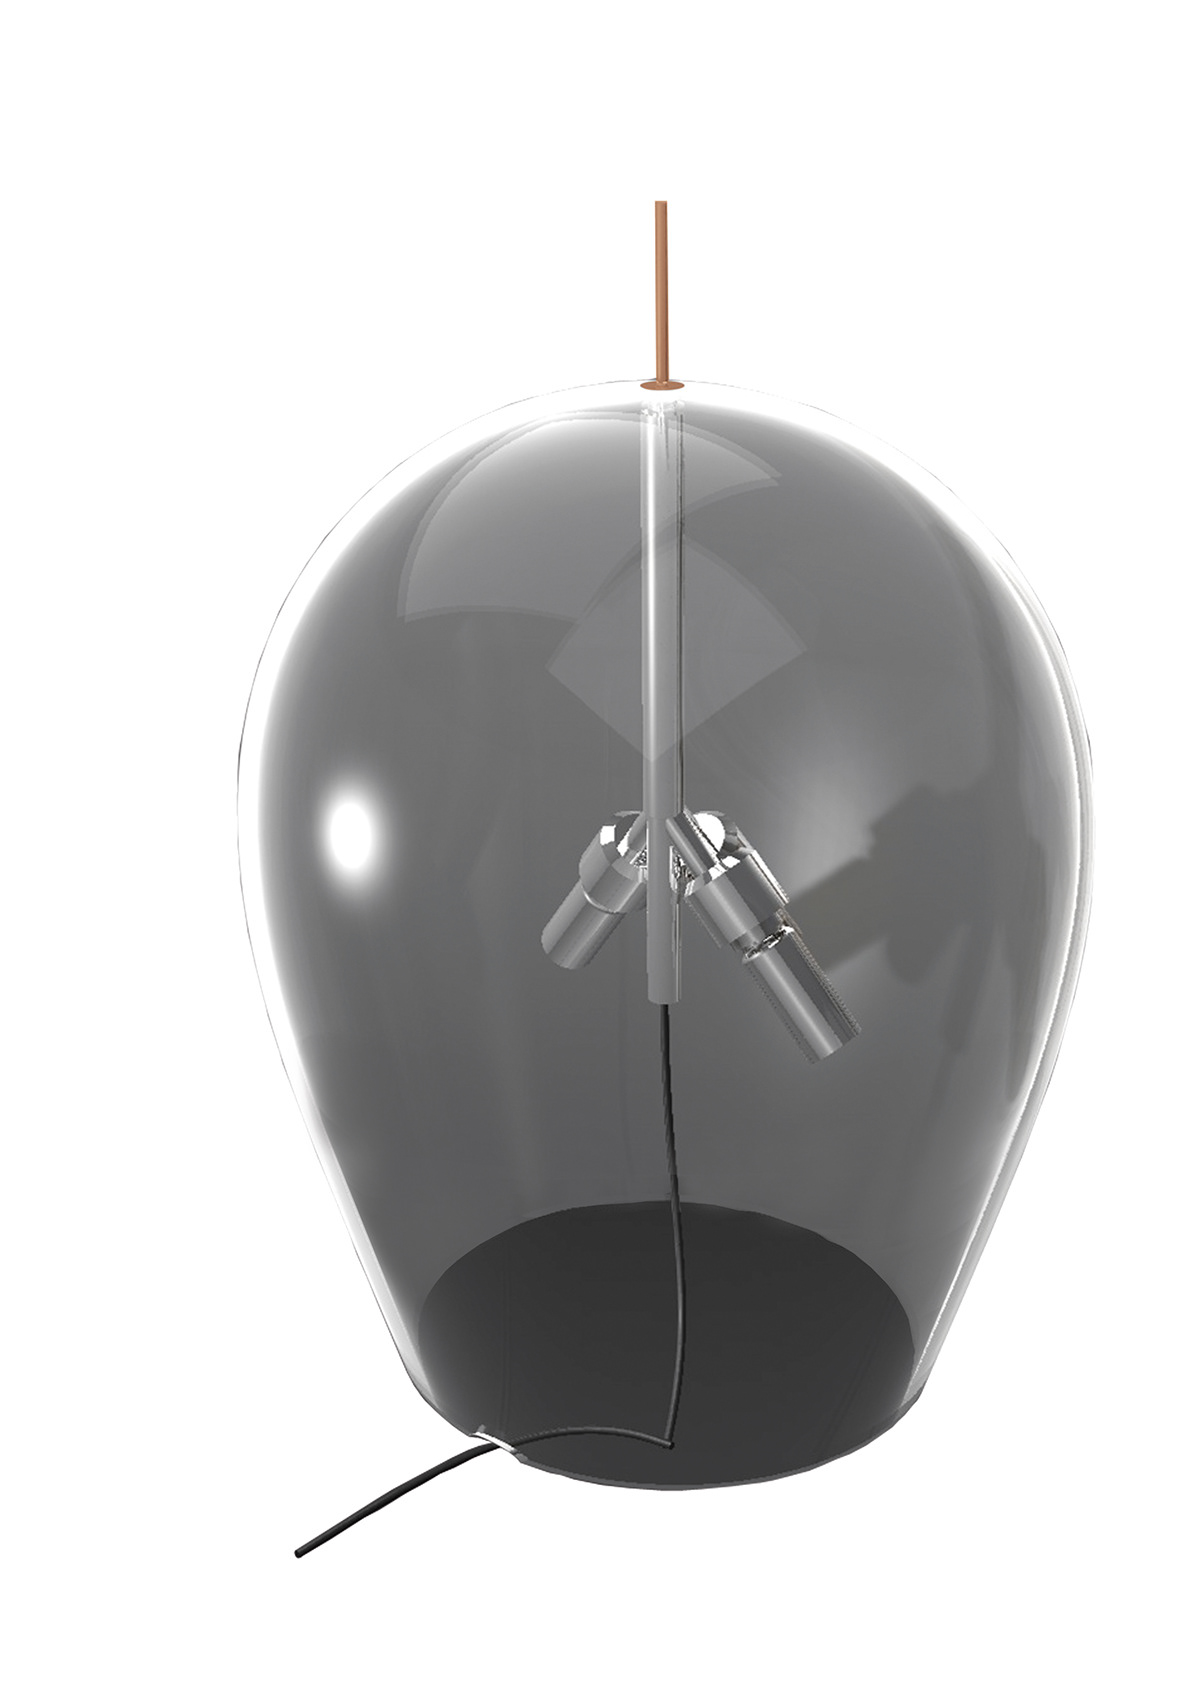 design forniture light industrial product Lamp Interior 3D rendering matteo tampellini Matteo tampellini